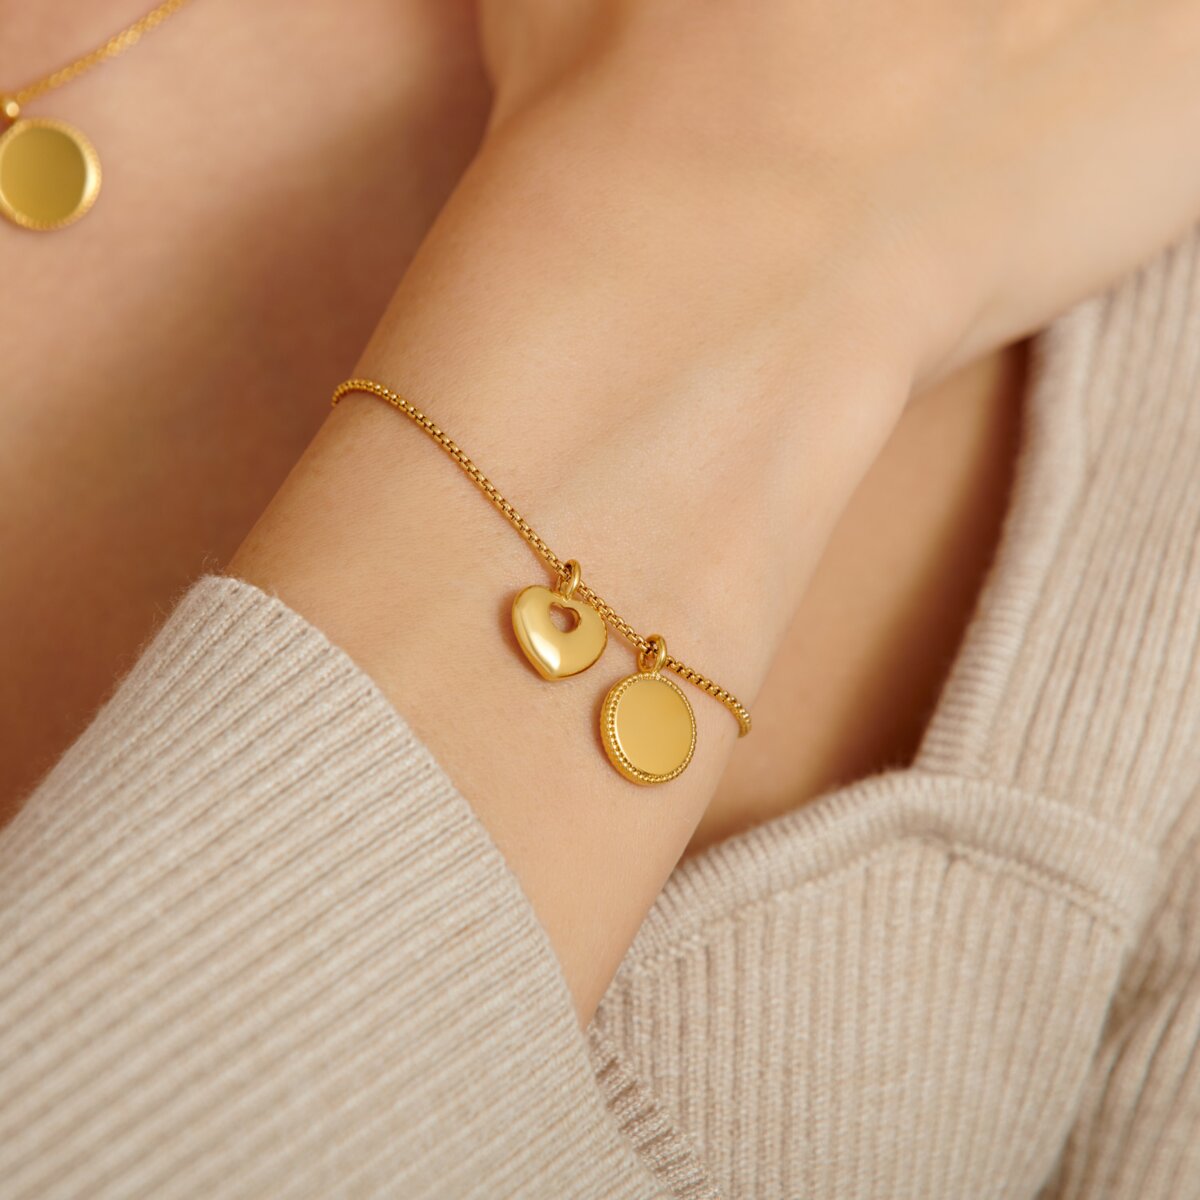 Katie Loxton | 'Family Forever' Waterproof Gold Charm Bracelet